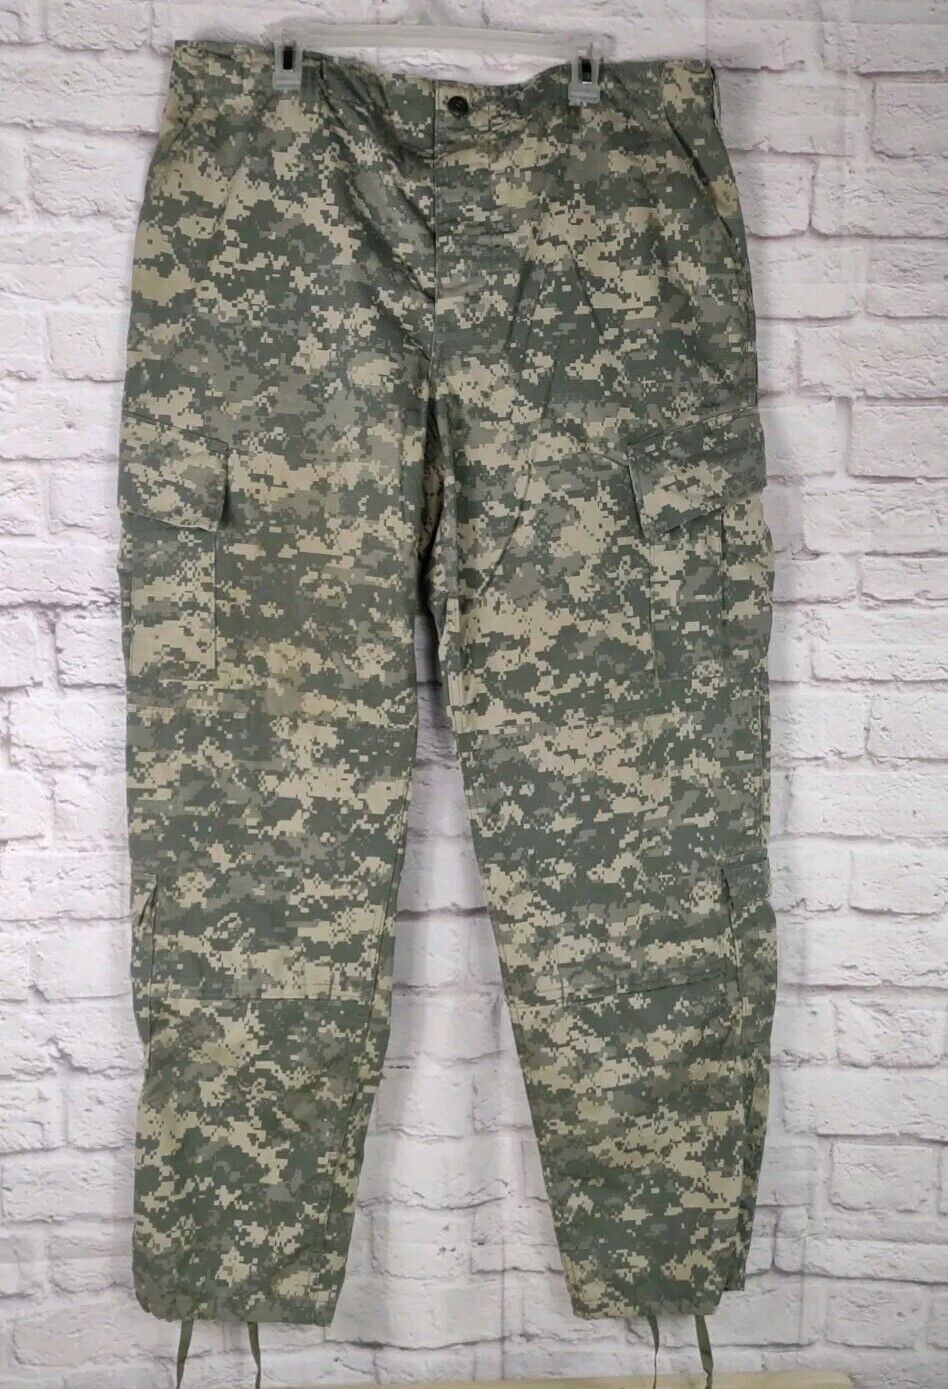 Team Soldier Certified Gear Camo Trouser Army Combat Uniform Pants Size XL 